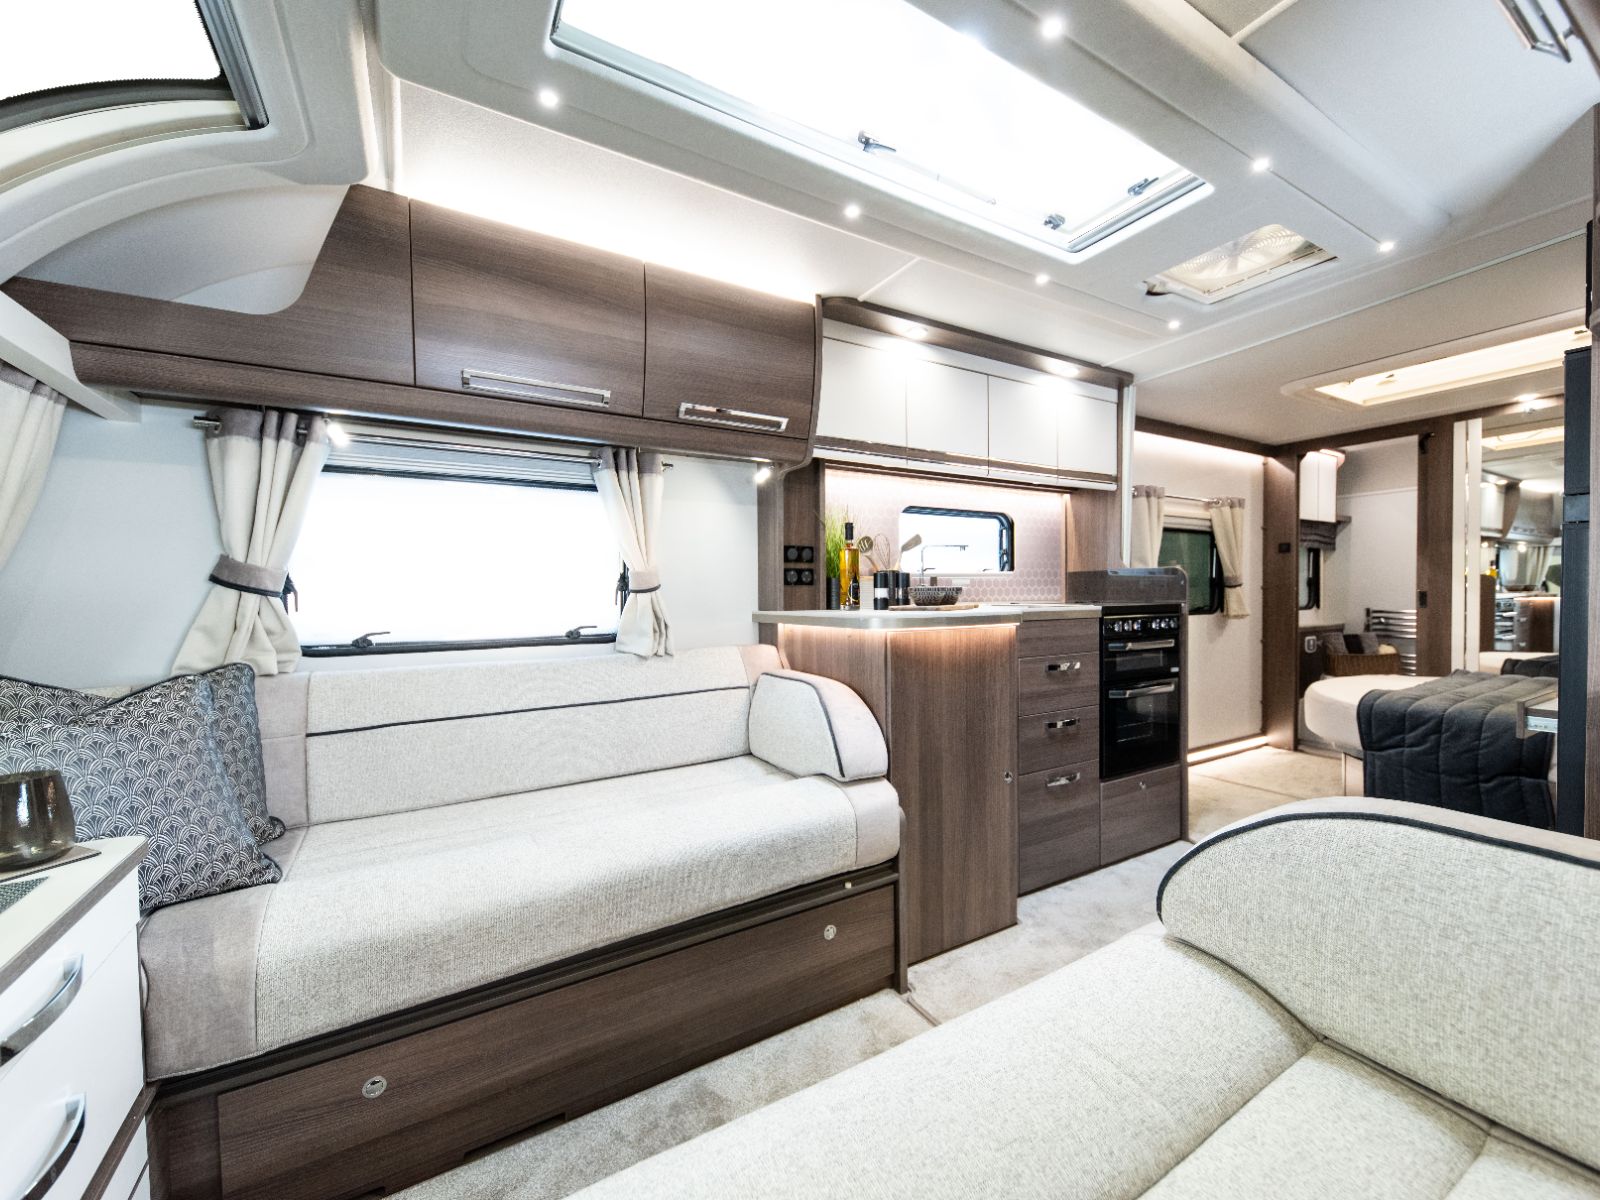 Luxury Caravan Lounge Area